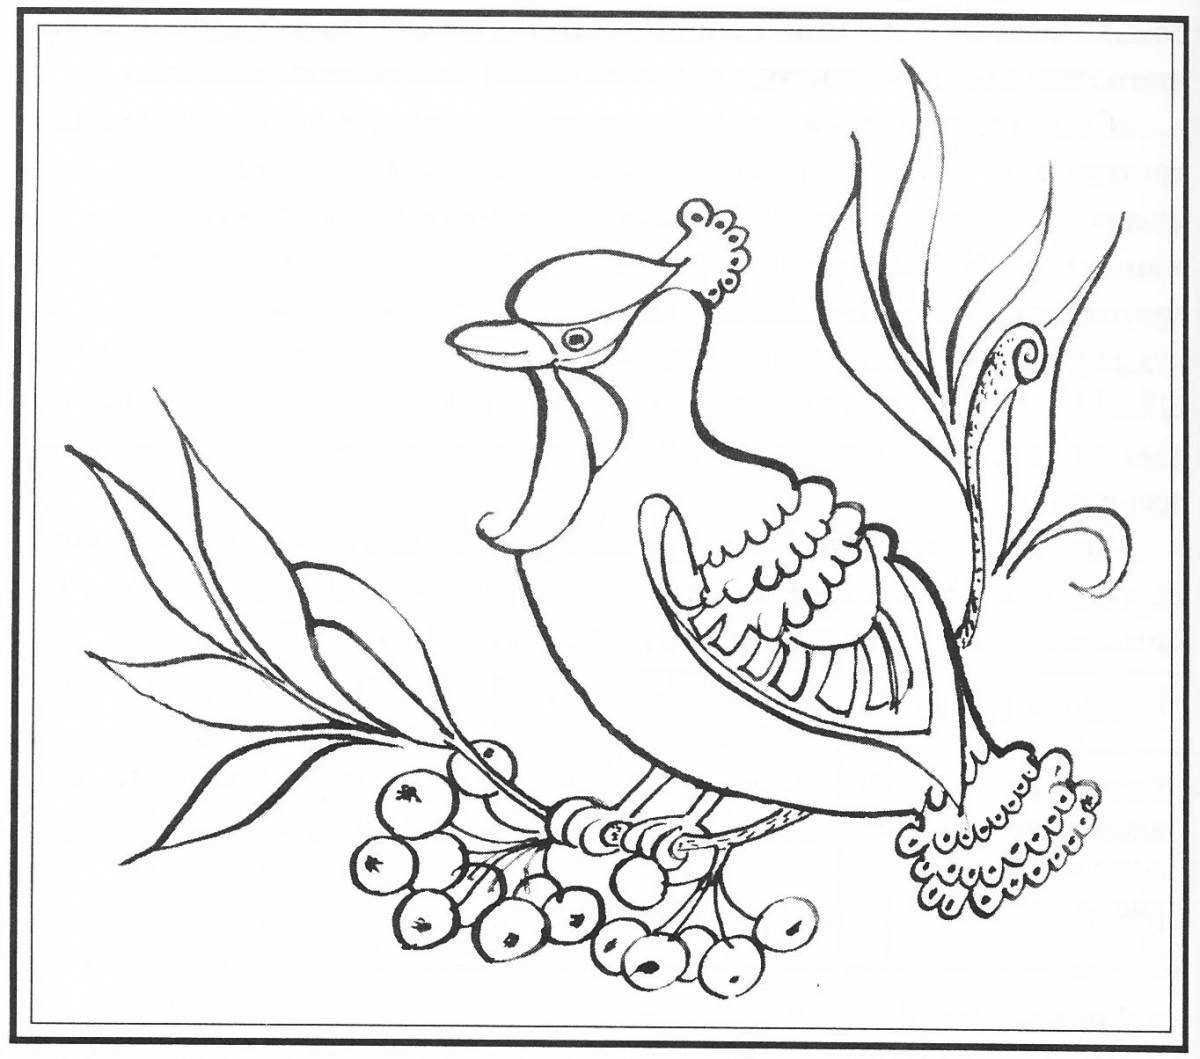 Coloring page elegant waxwing bird